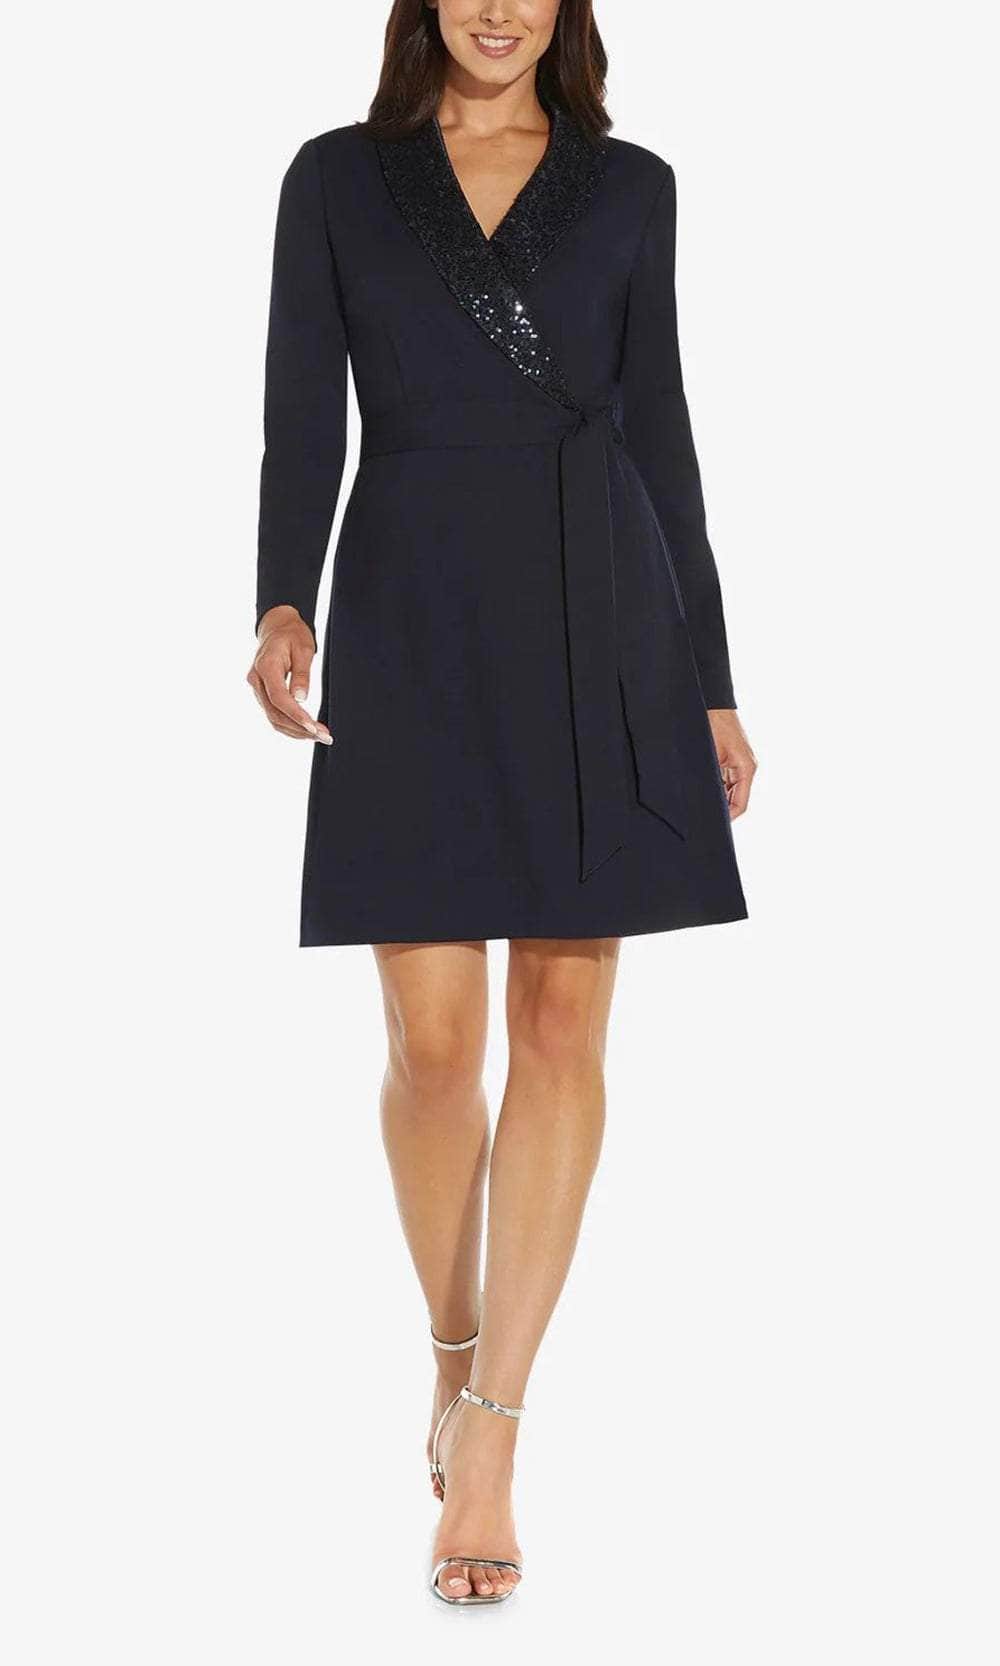 Adrianna Papell AP1D104563 - Sequin Tuxedo Short Dress Cocktail Dresses 0 / Black